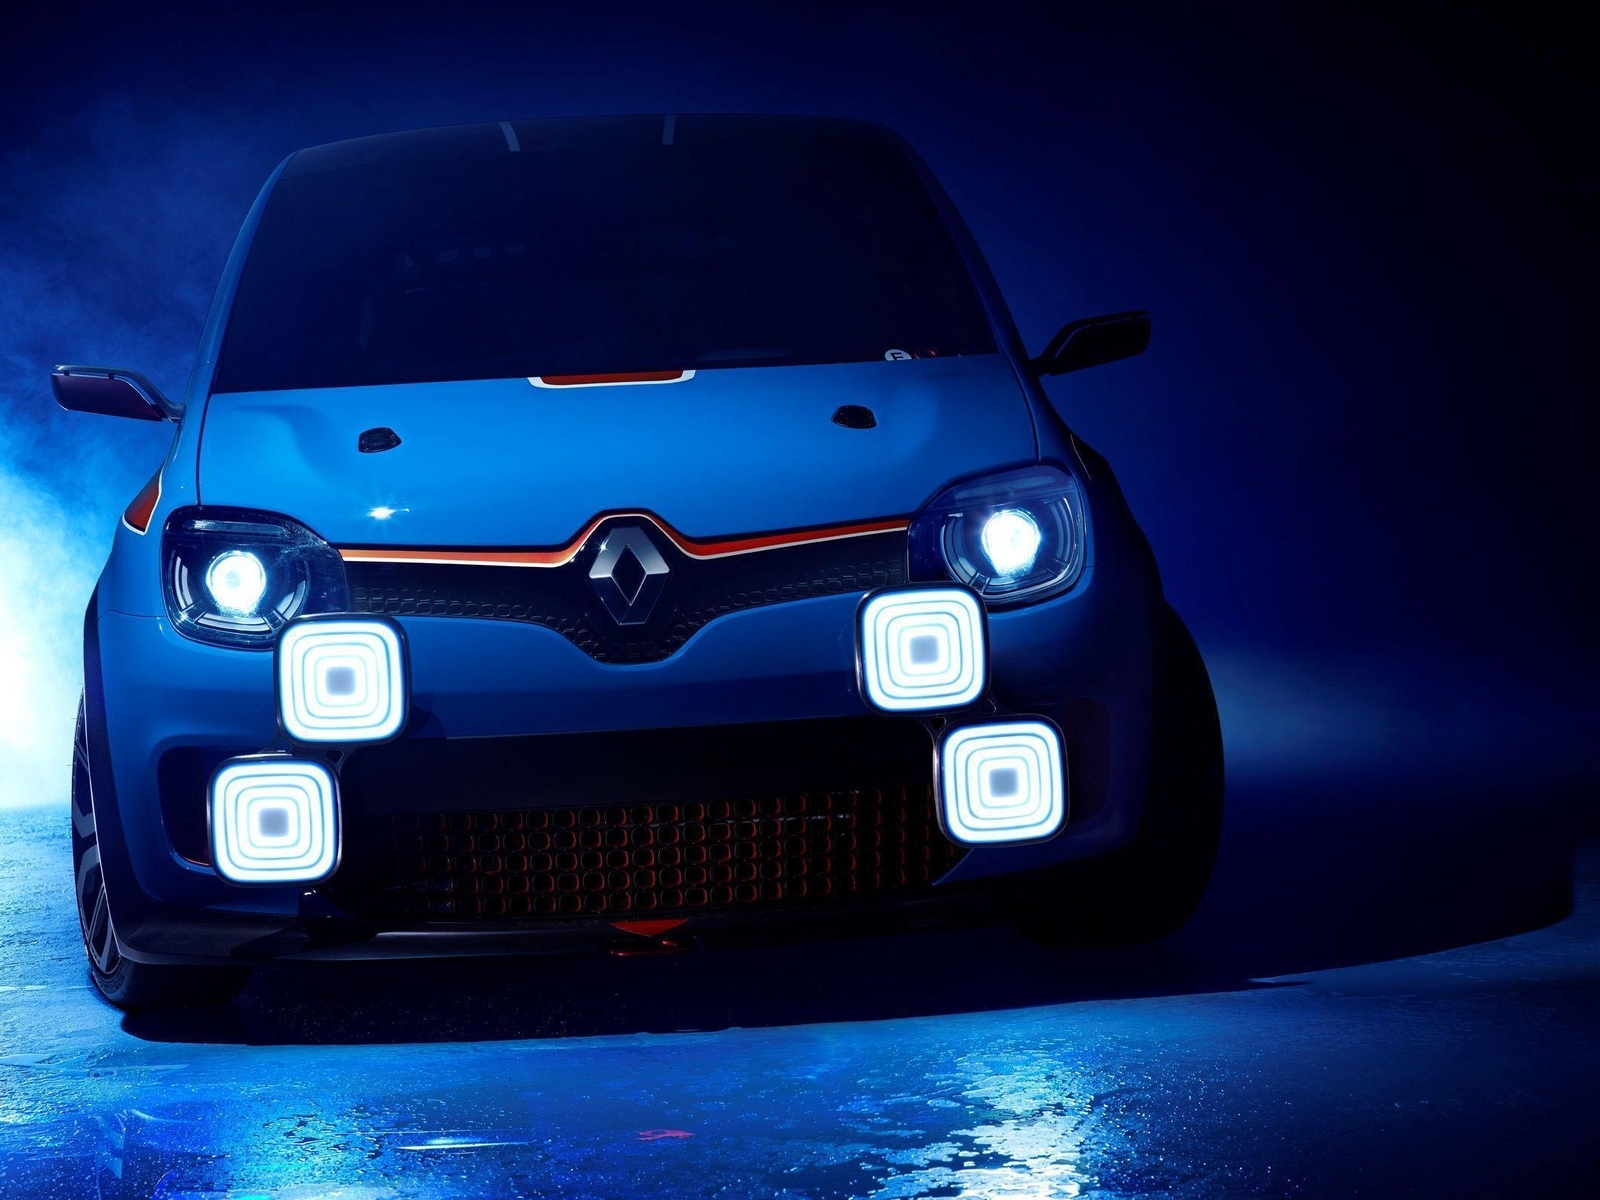 Картинка: Renault, Ренаулт, фары, тюнинг, свет, авто